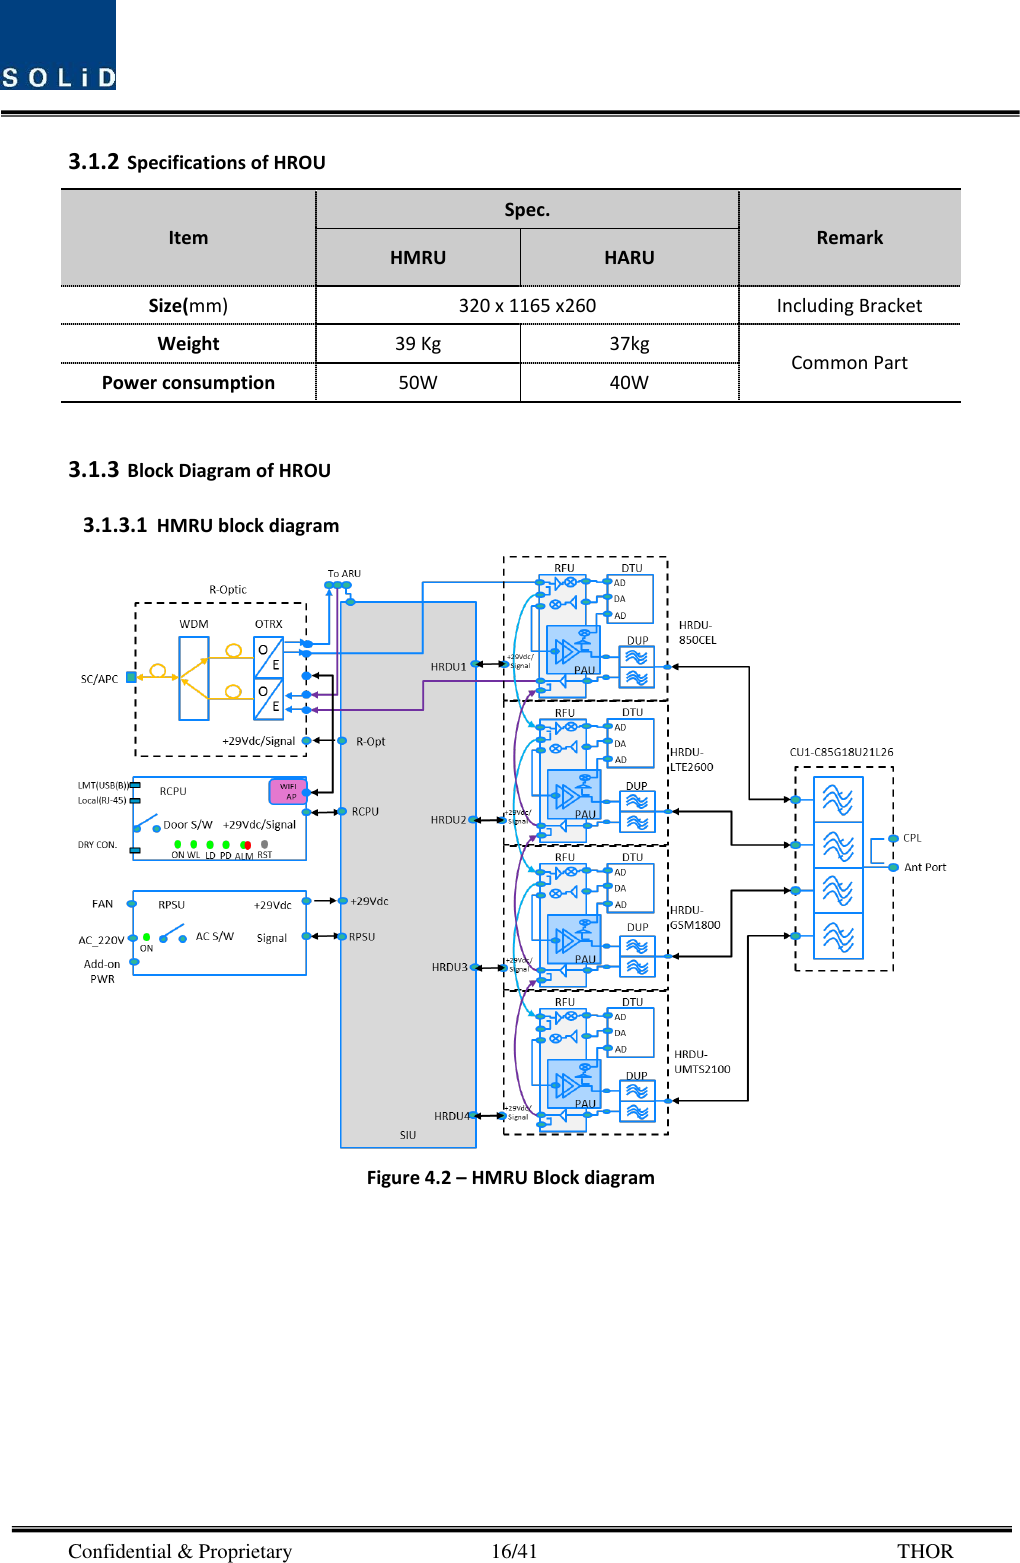  Confidential &amp; Proprietary                                      16/41       THOR 3.1.2 Specifications of HROU Item Spec. Remark HMRU HARU Size(mm) 320 x 1165 x260 Including Bracket Weight 39 Kg 37kg Common Part Power consumption 50W 40W  3.1.3 Block Diagram of HROU 3.1.3.1 HMRU block diagram  Figure 4.2 – HMRU Block diagram  